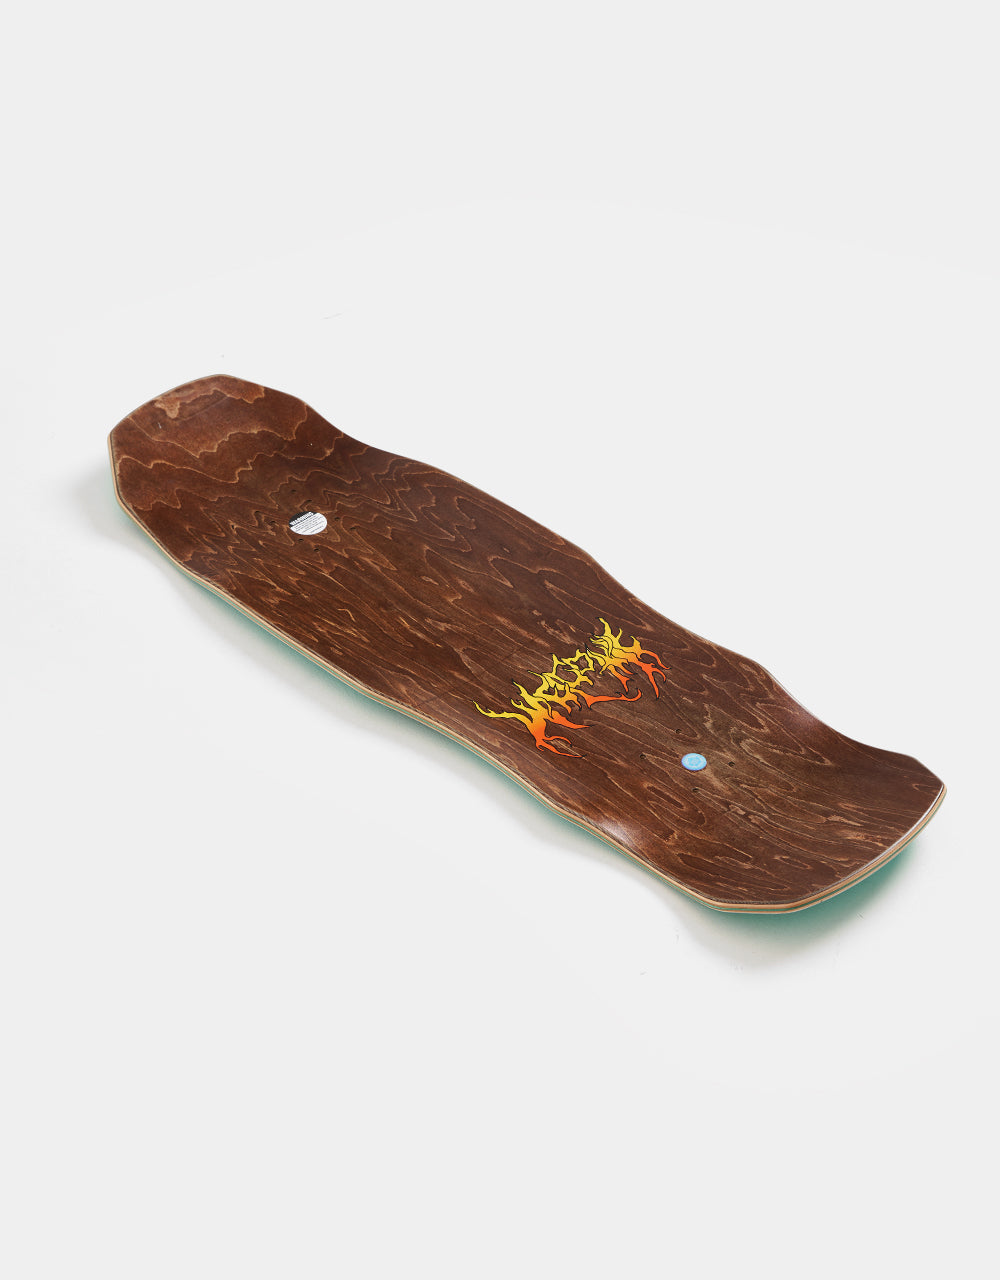 Welcome Firebreather on Dark Lord Skateboard Deck - 9.75"